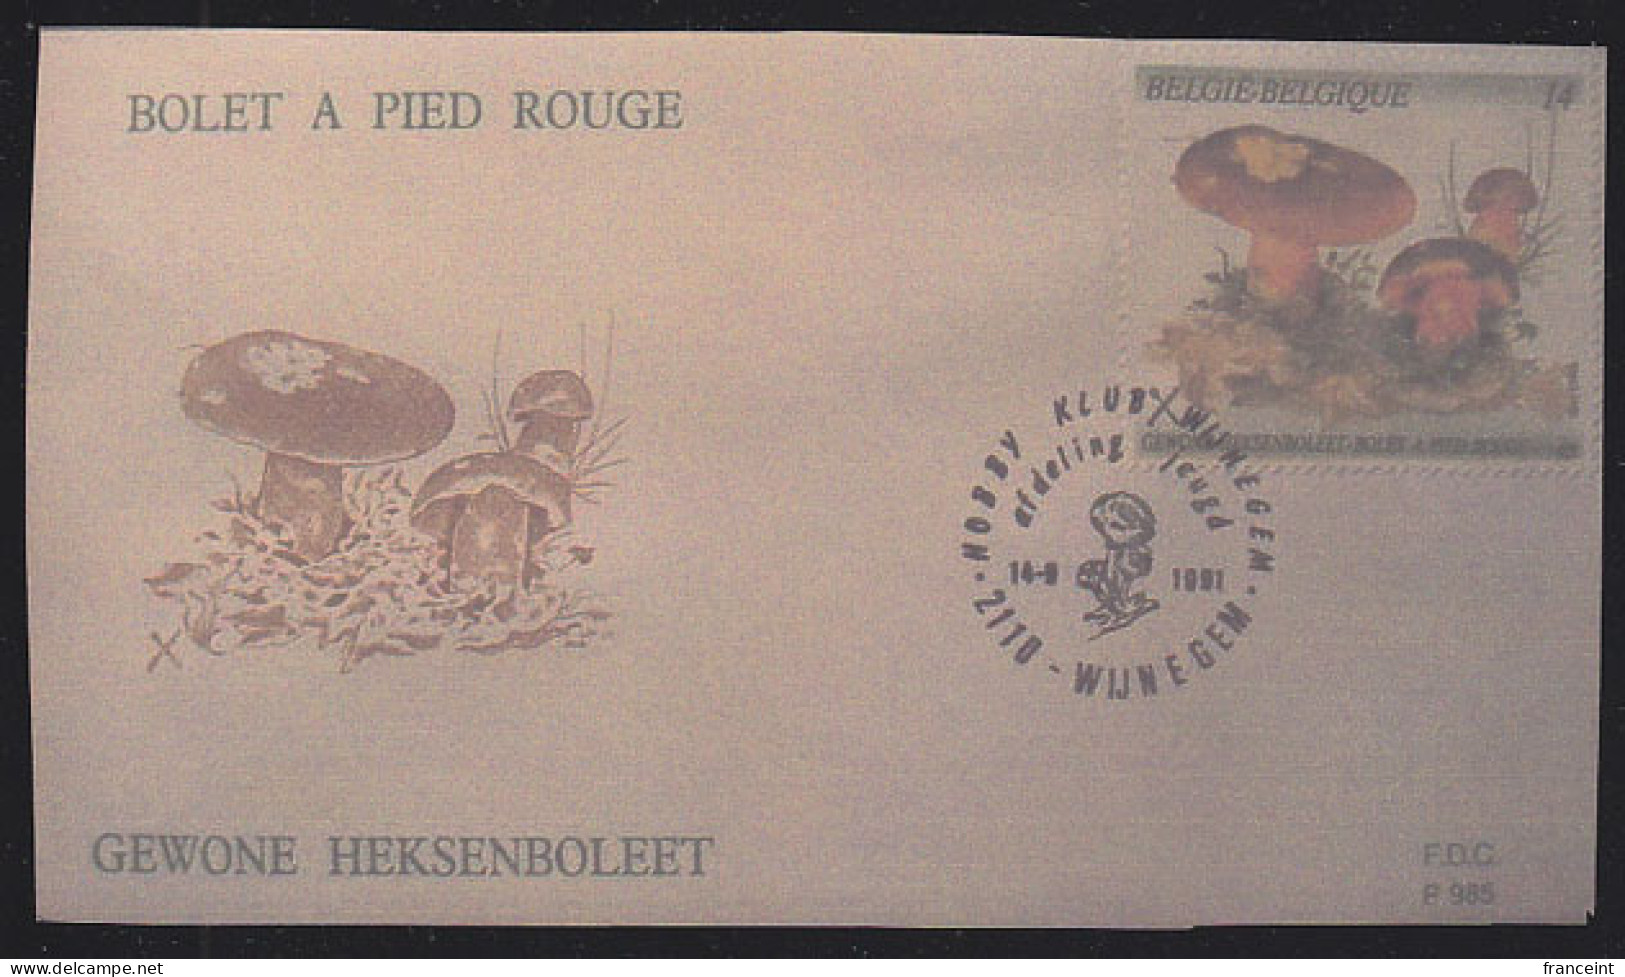 BELGIUM(1991) Boletus Erythropus. Die Proof In Green Signed By The Engraver, Representing The FDC Cachet. Scott No 1413. - Proeven & Herdruk